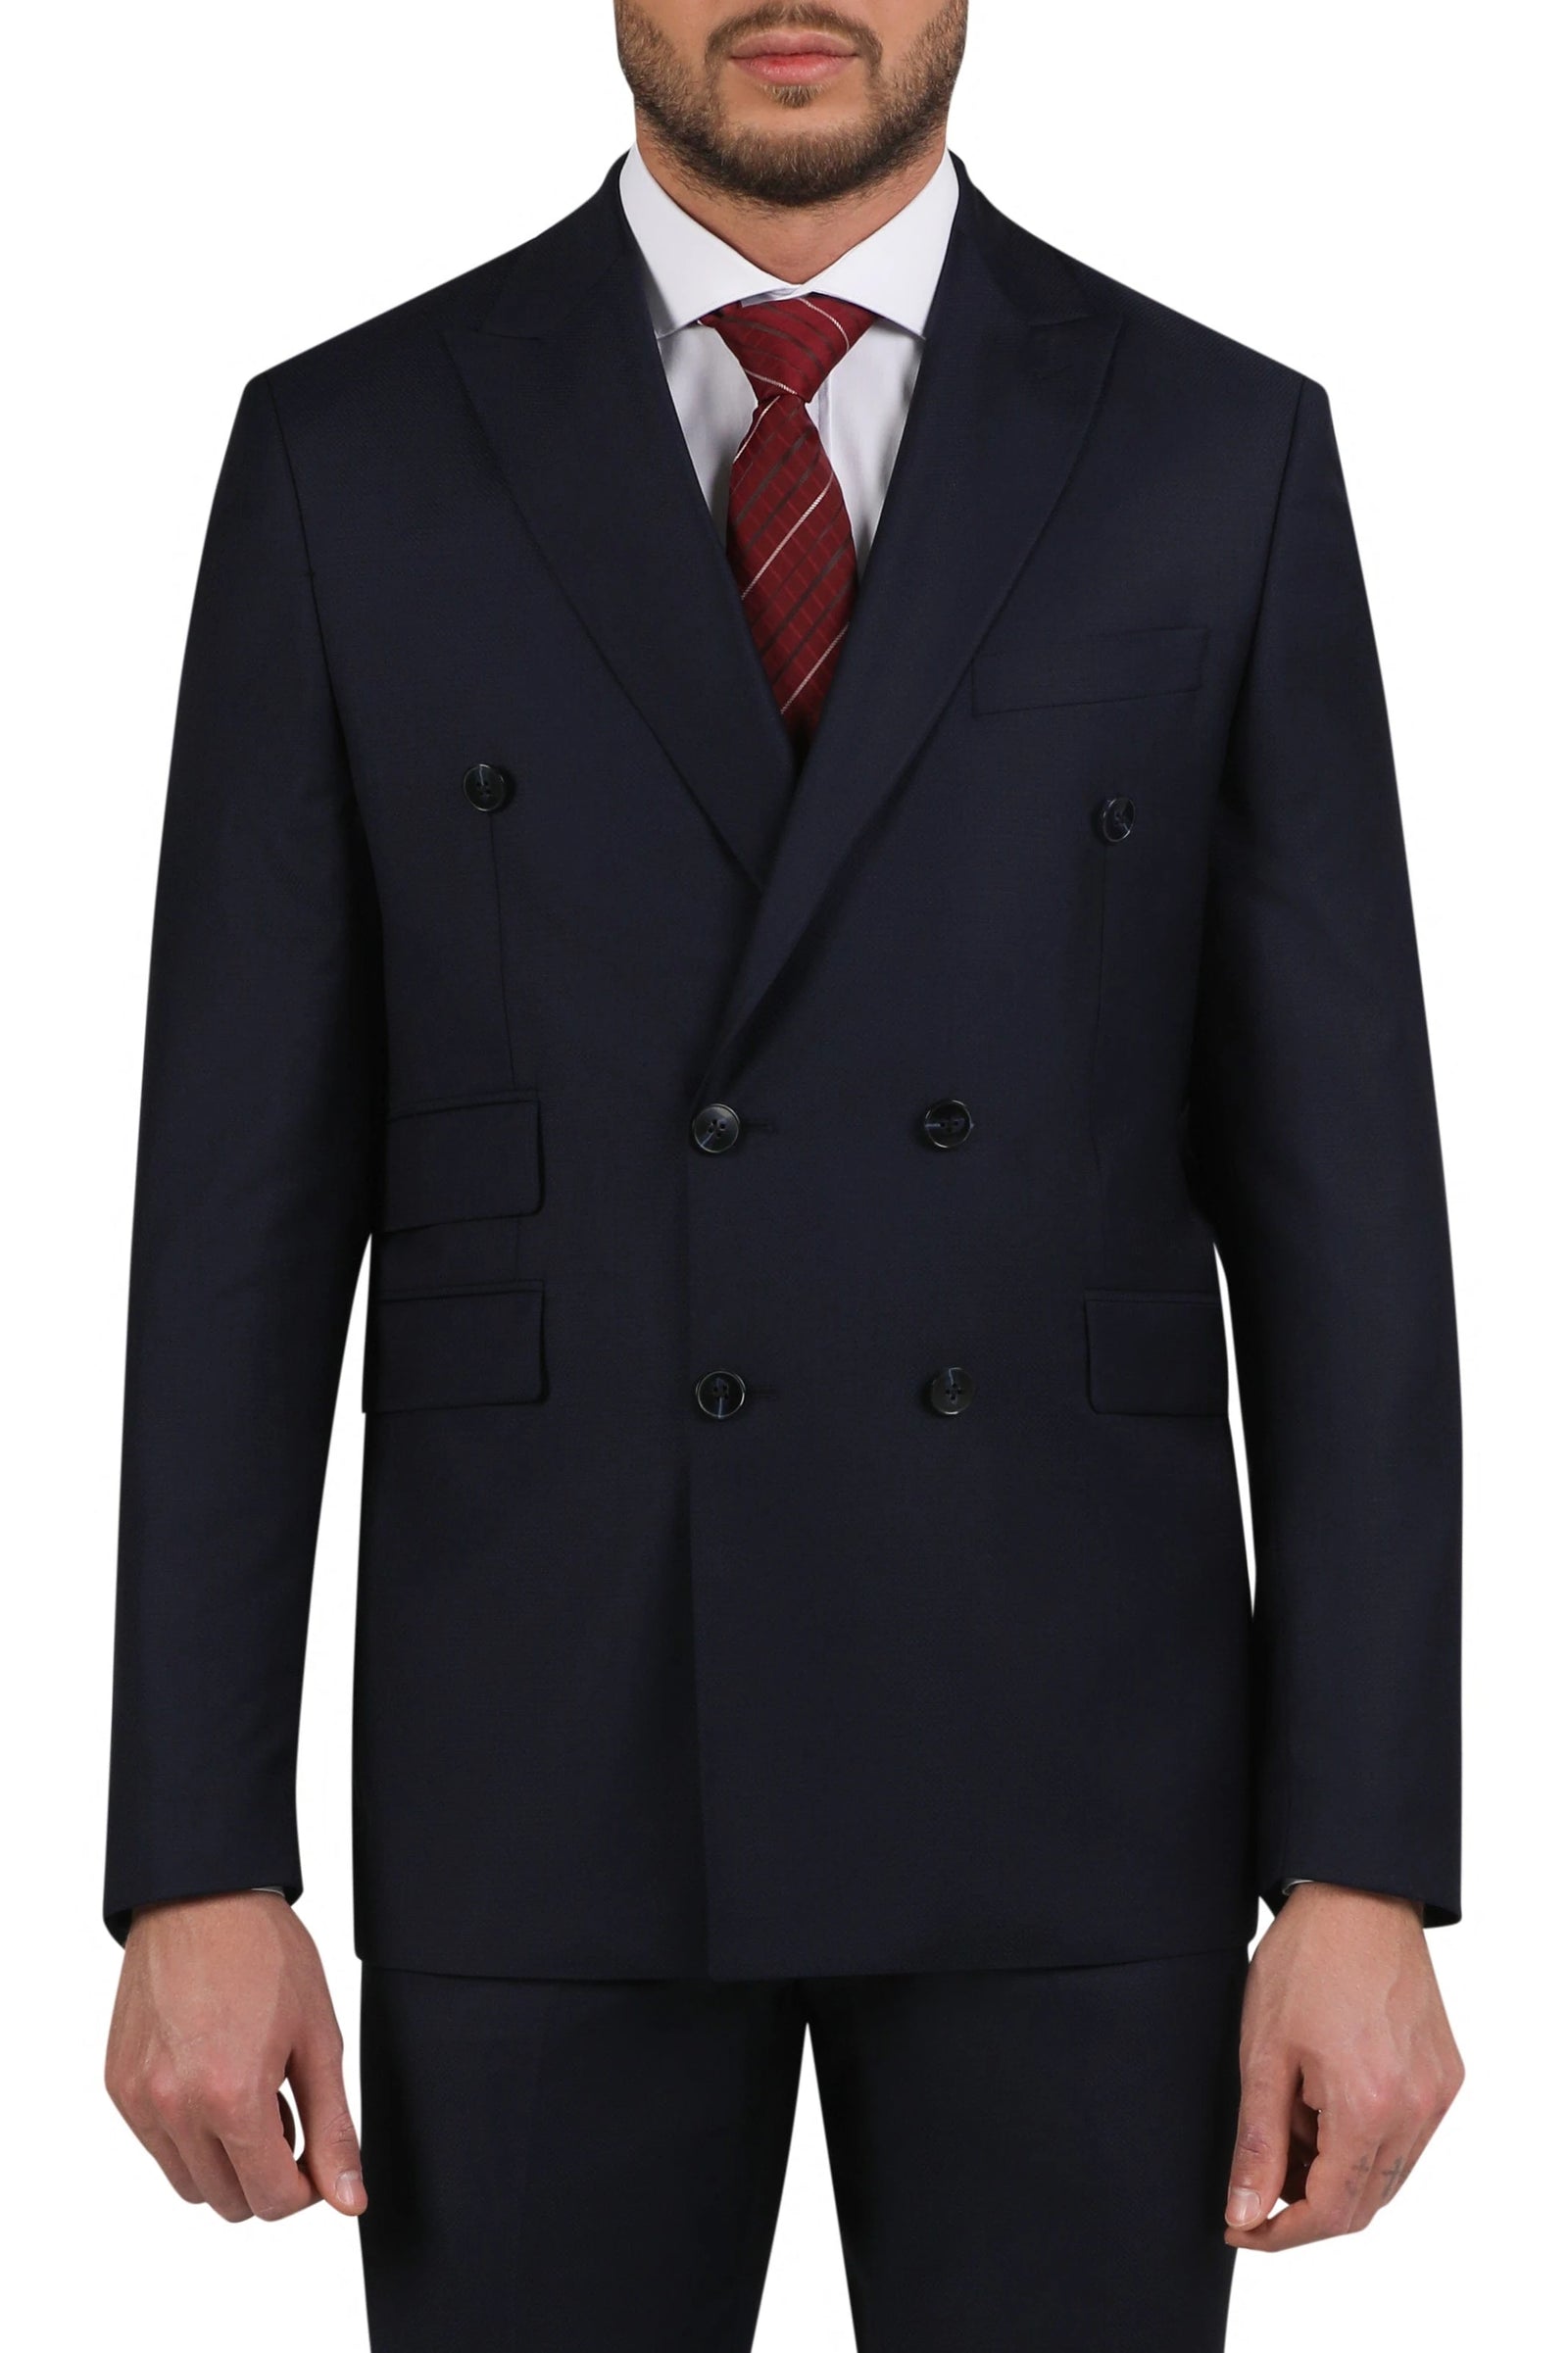 Wintage Men's Wool Casual and Festive Blazer Coat Jacket : Black